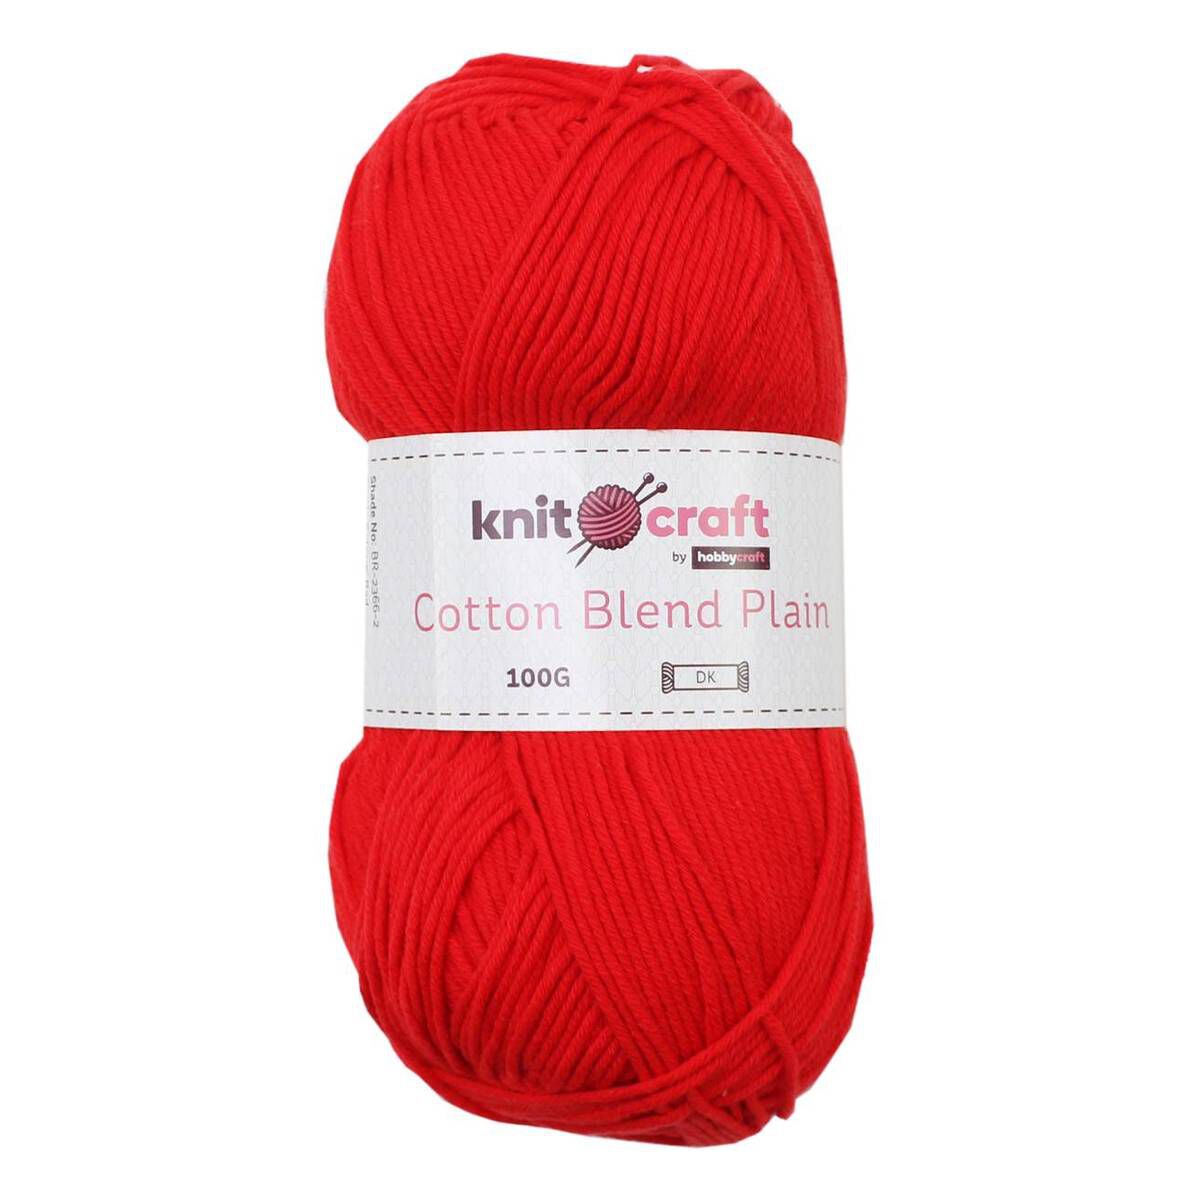 Knitcraft Red Cotton Blend Plain DK Yarn 100g | Hobbycraft